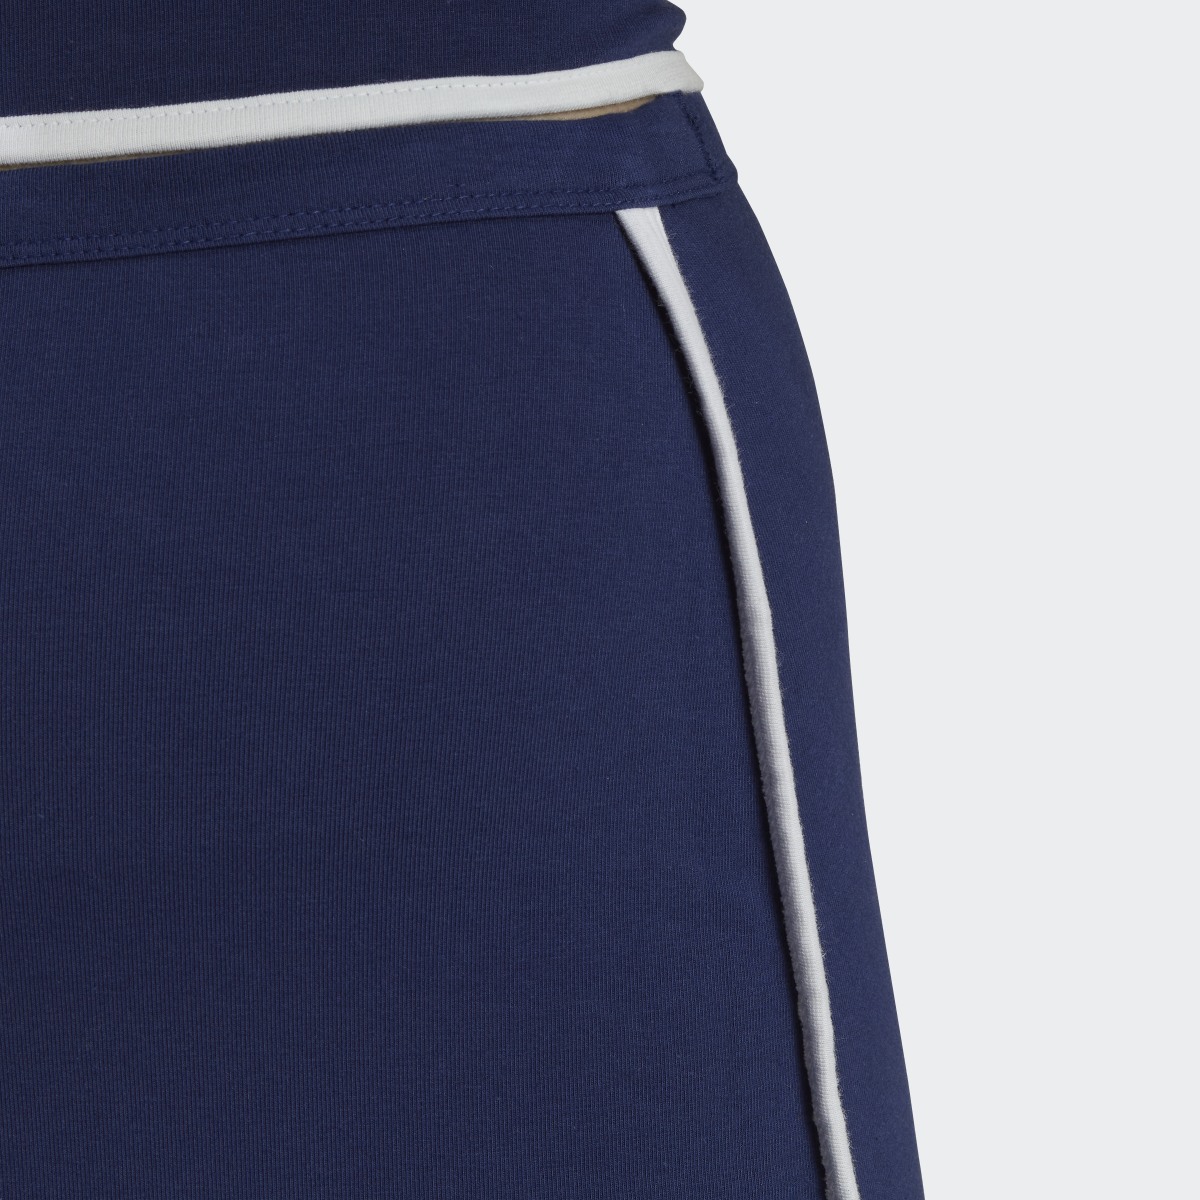 Adidas Mini Skirt with Binding Details. 6